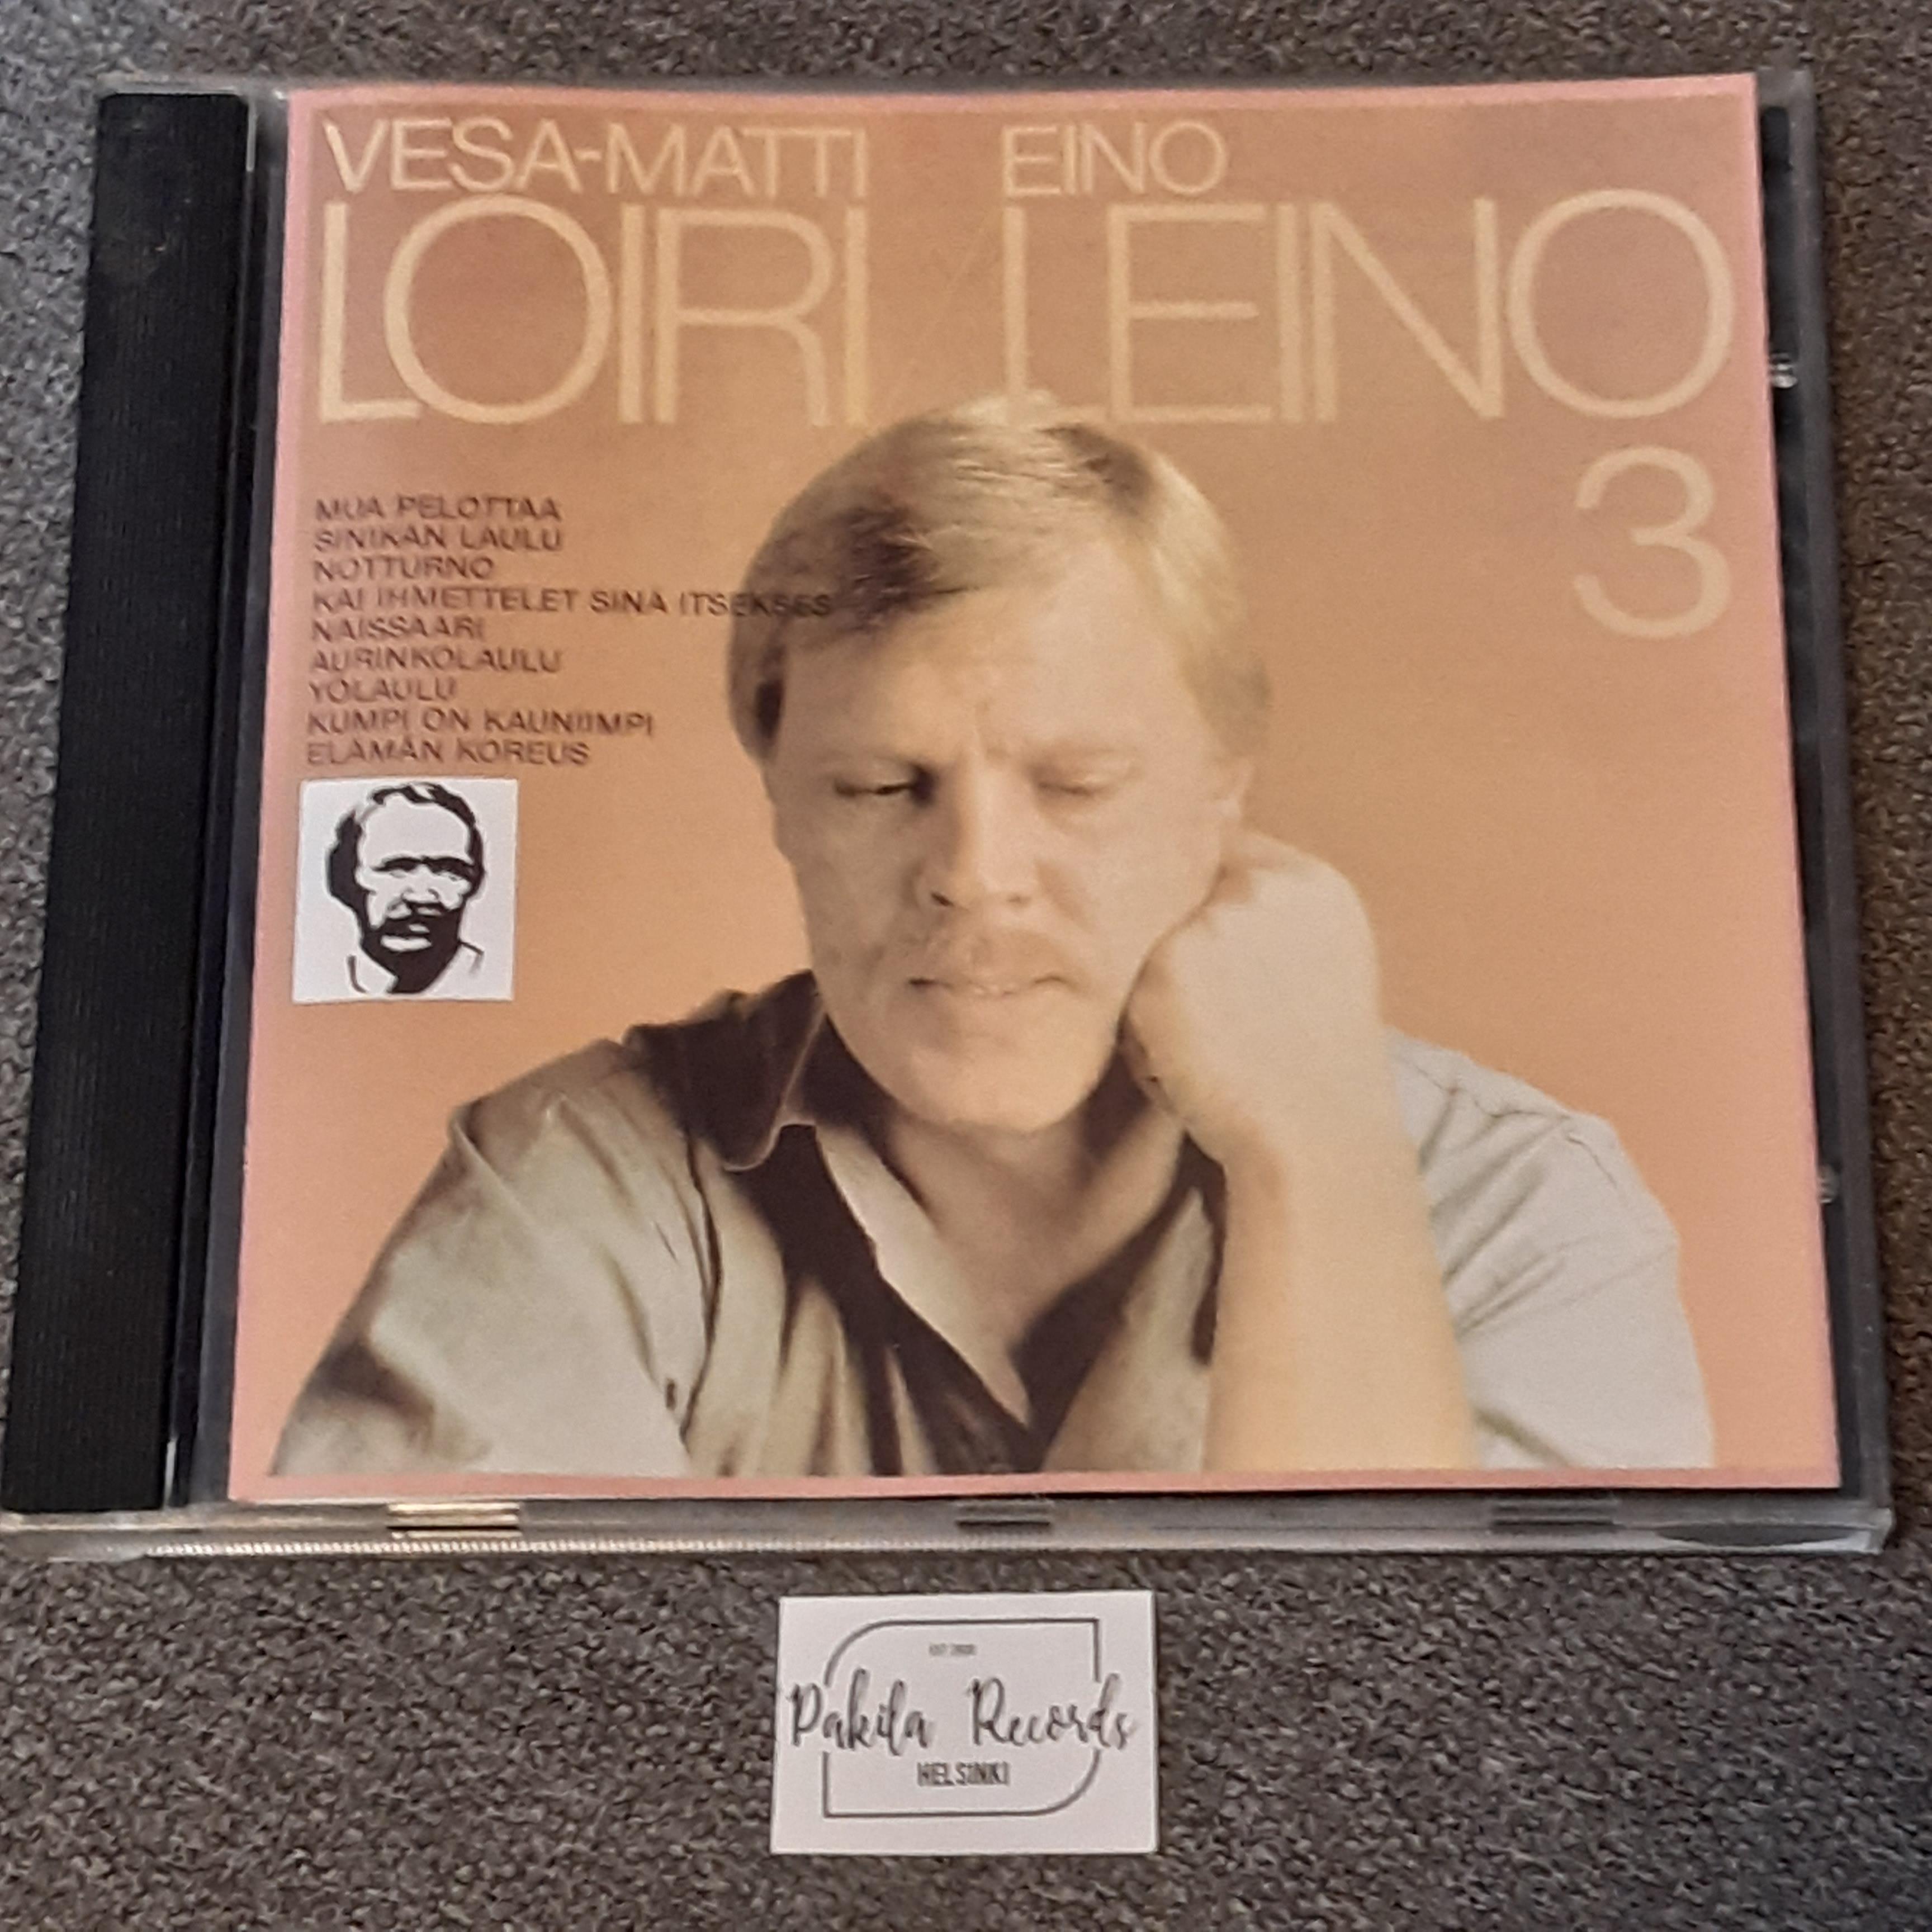 Vesa-Matti Loiri - Eino Leino 3 - CD (käytetty)